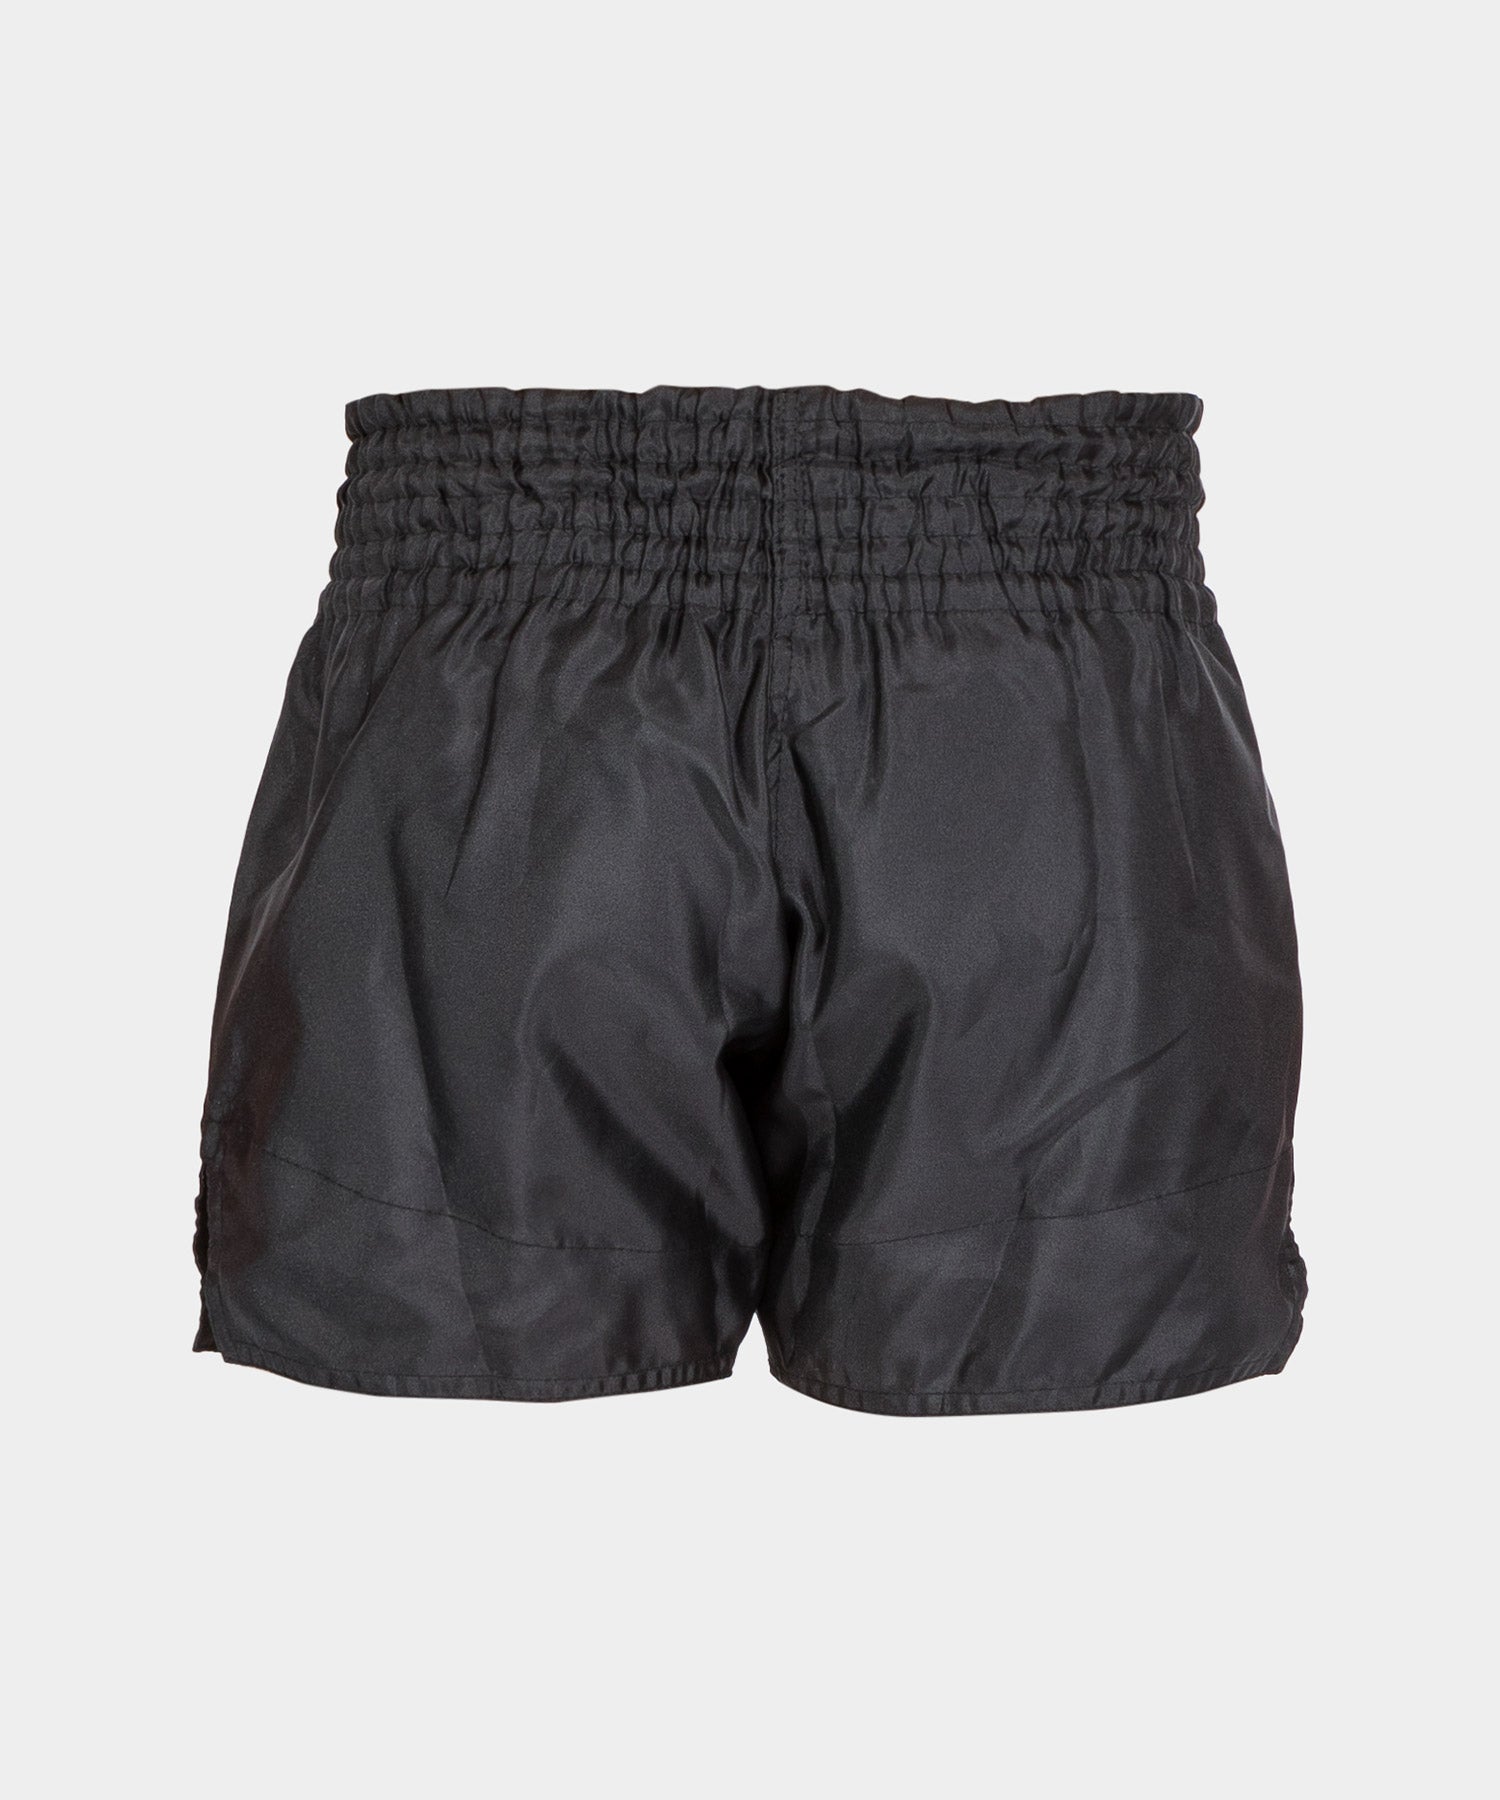 Venum Classic Muay Thai Shorts - XS - Black/Black